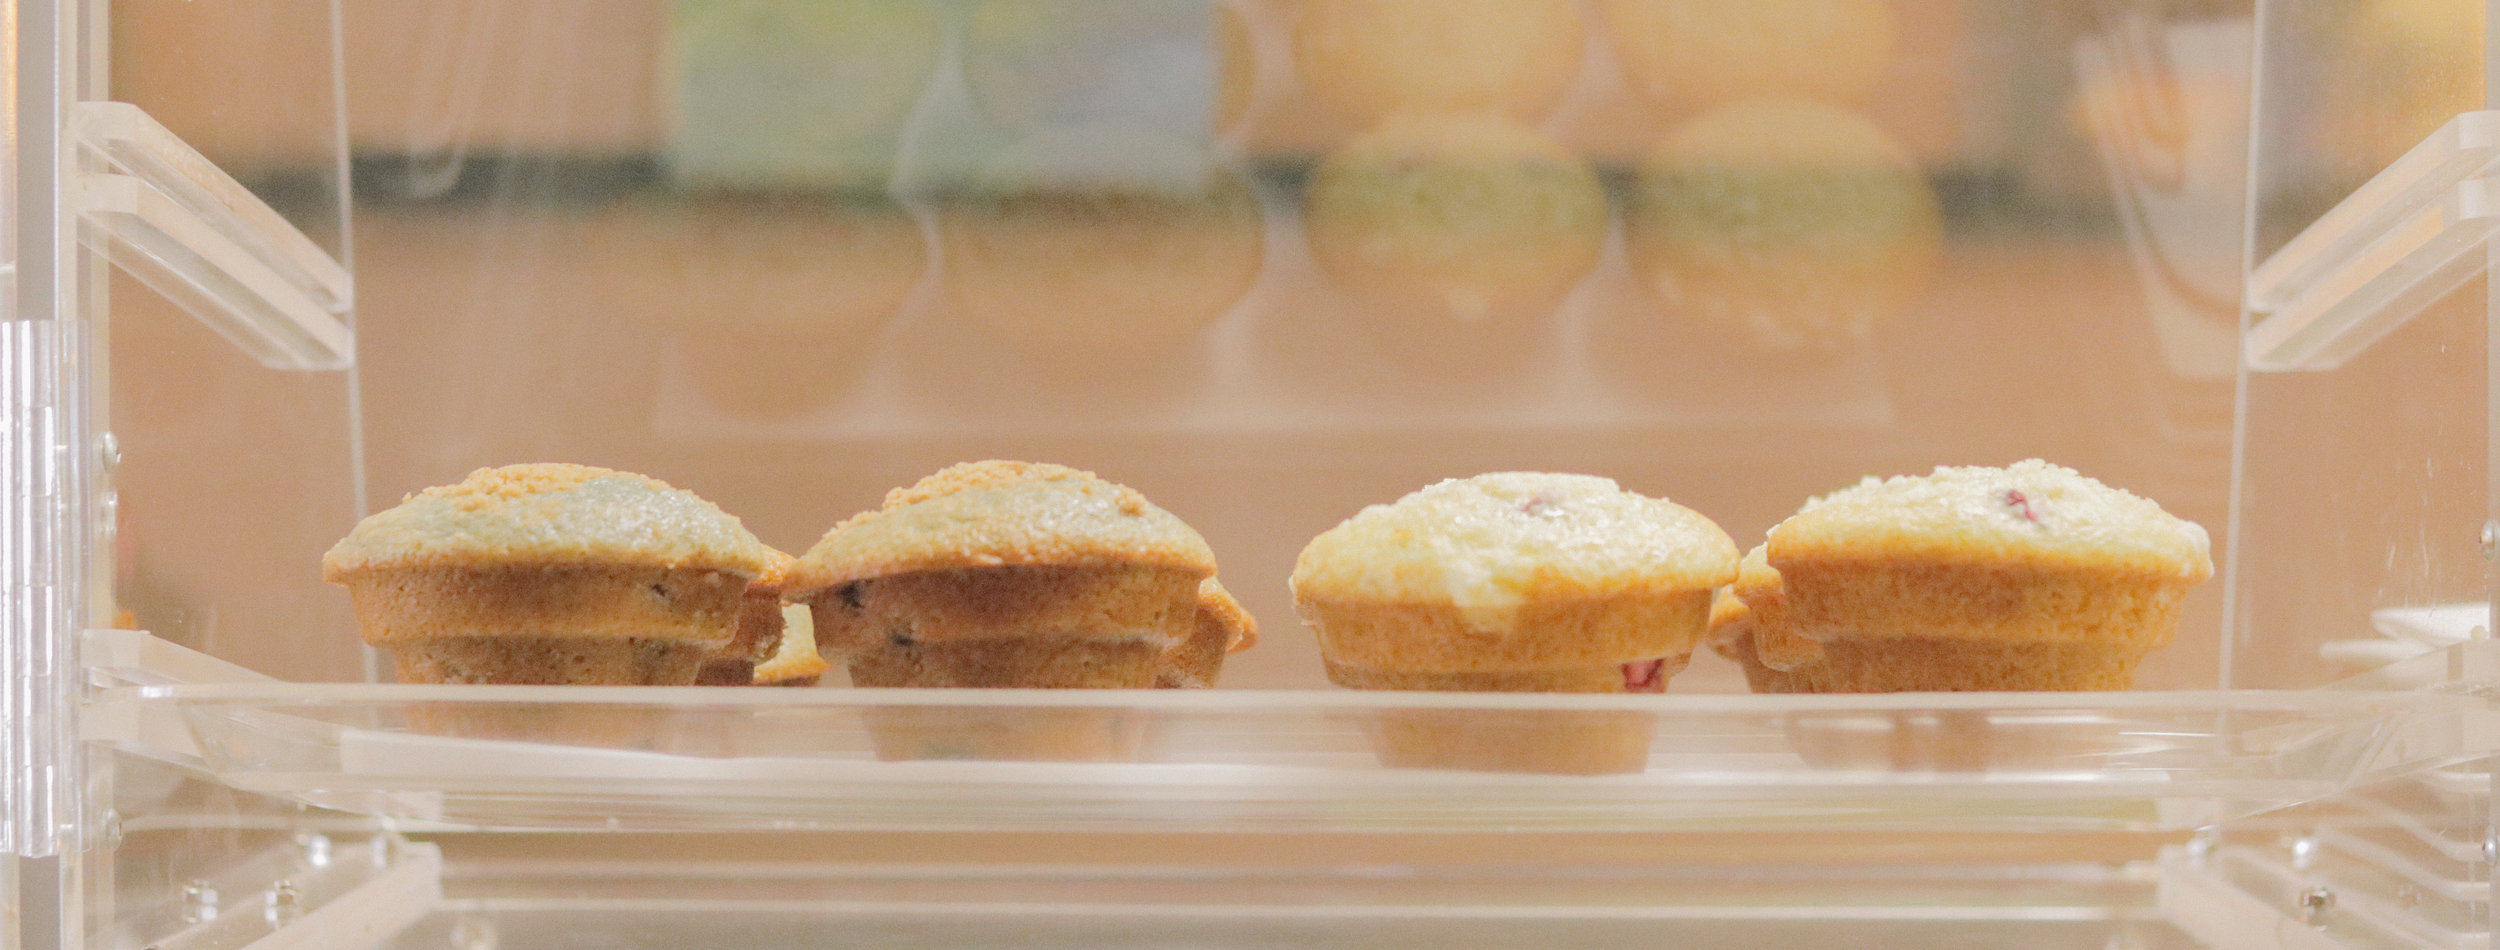 Muffin row.jpg